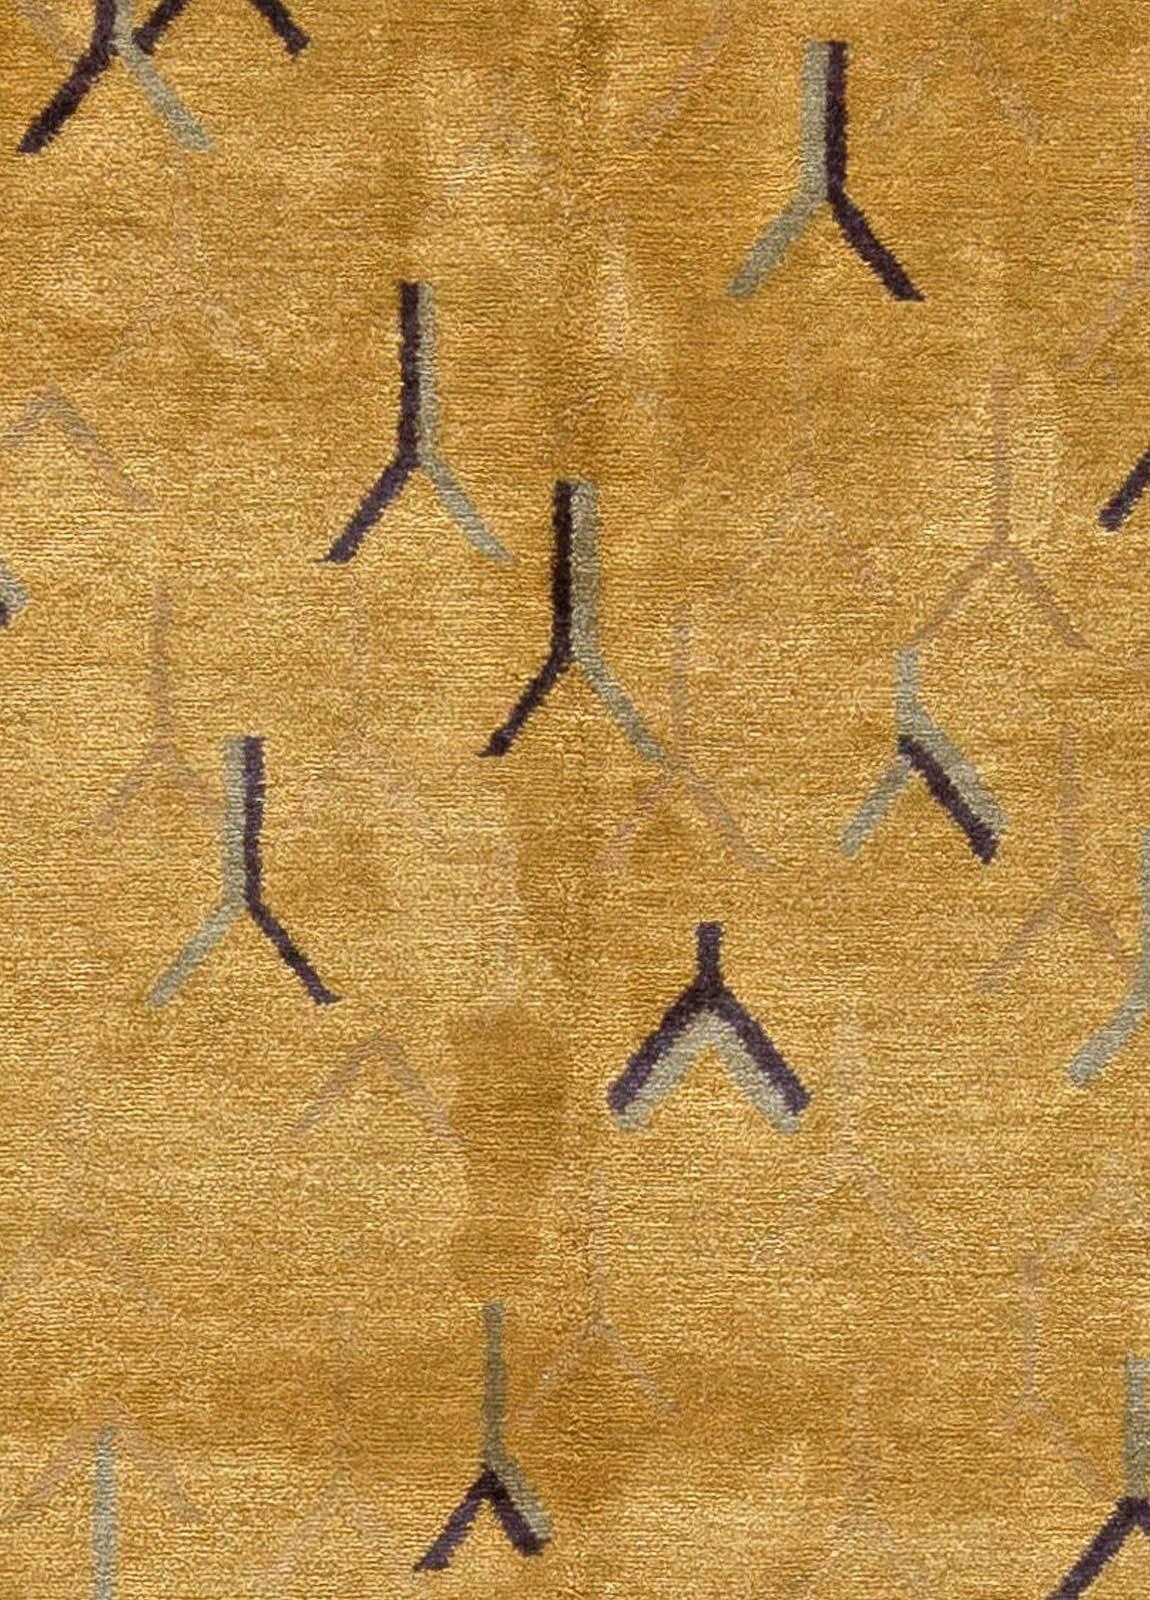 Modern Tibetan gold and yellow handmade wool and silk rug by Doris Leslie Blau
Size: 7'7